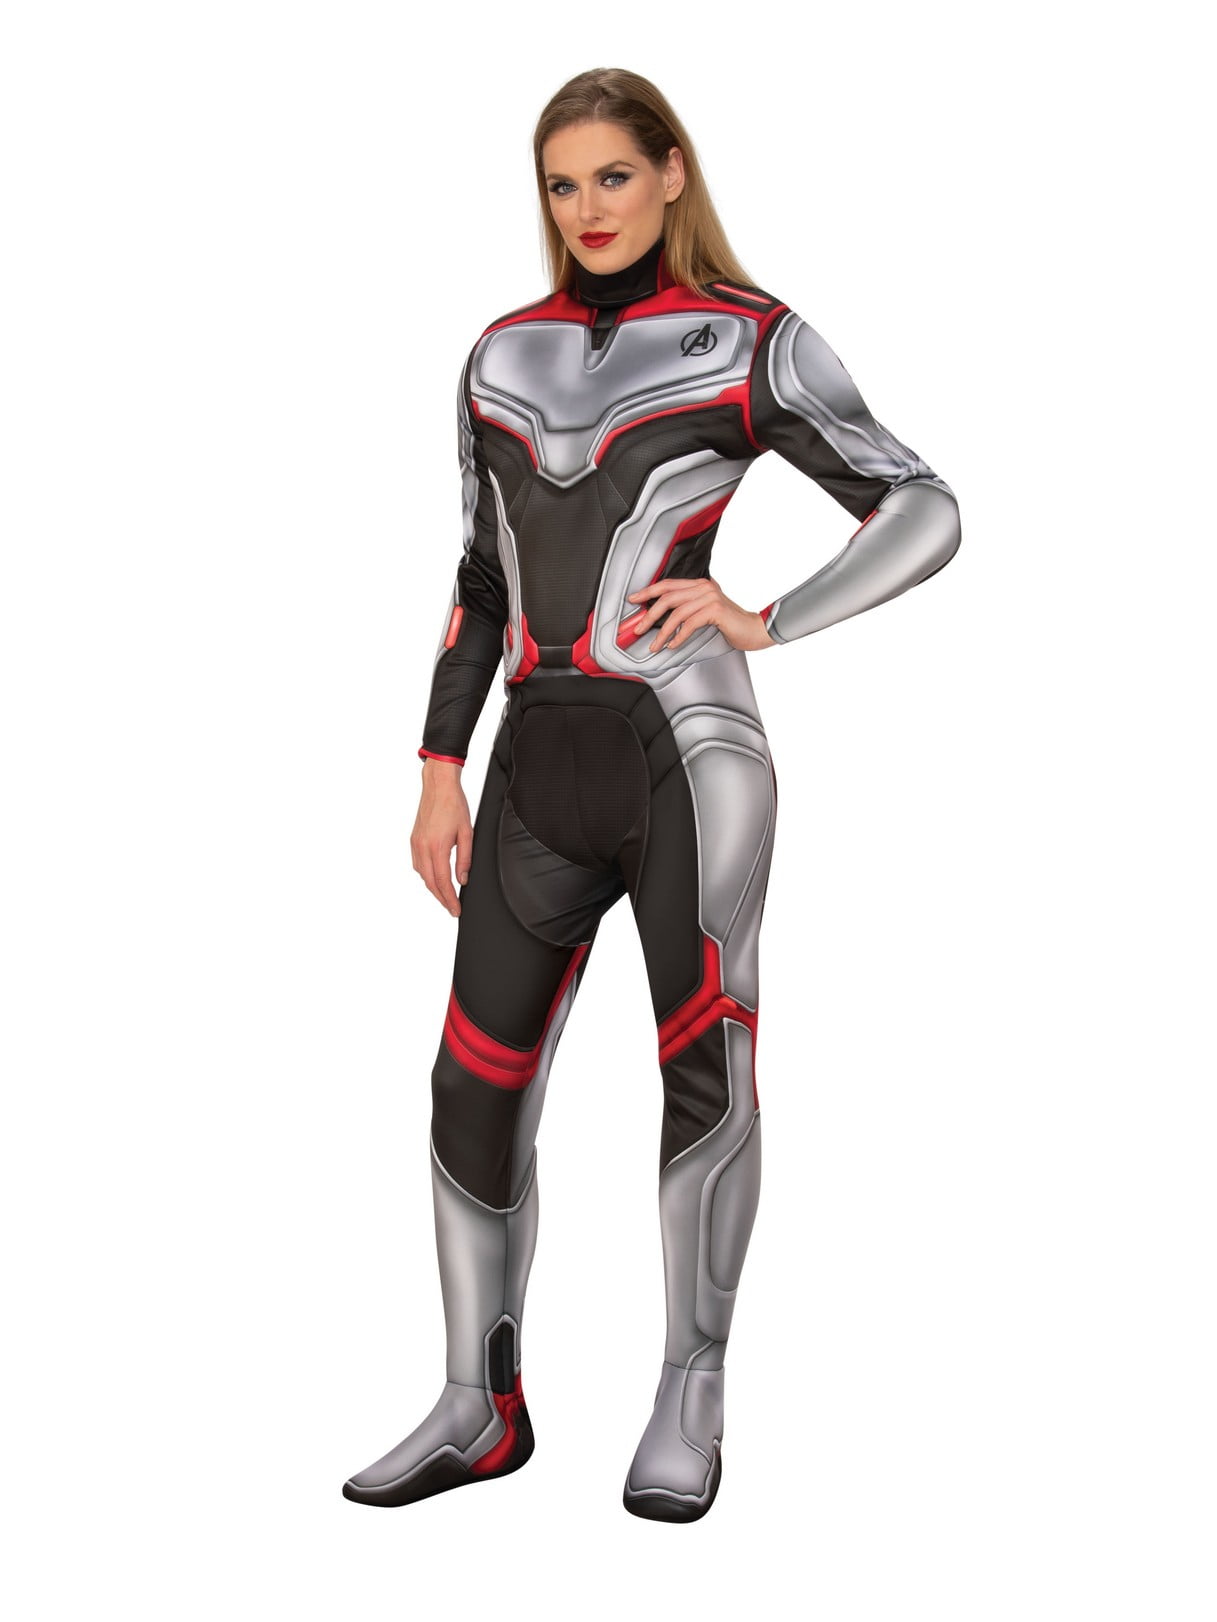 Avengers 4 Endgame Quantum Suit Costume Kids Boys Girls Halloween Cosplay 